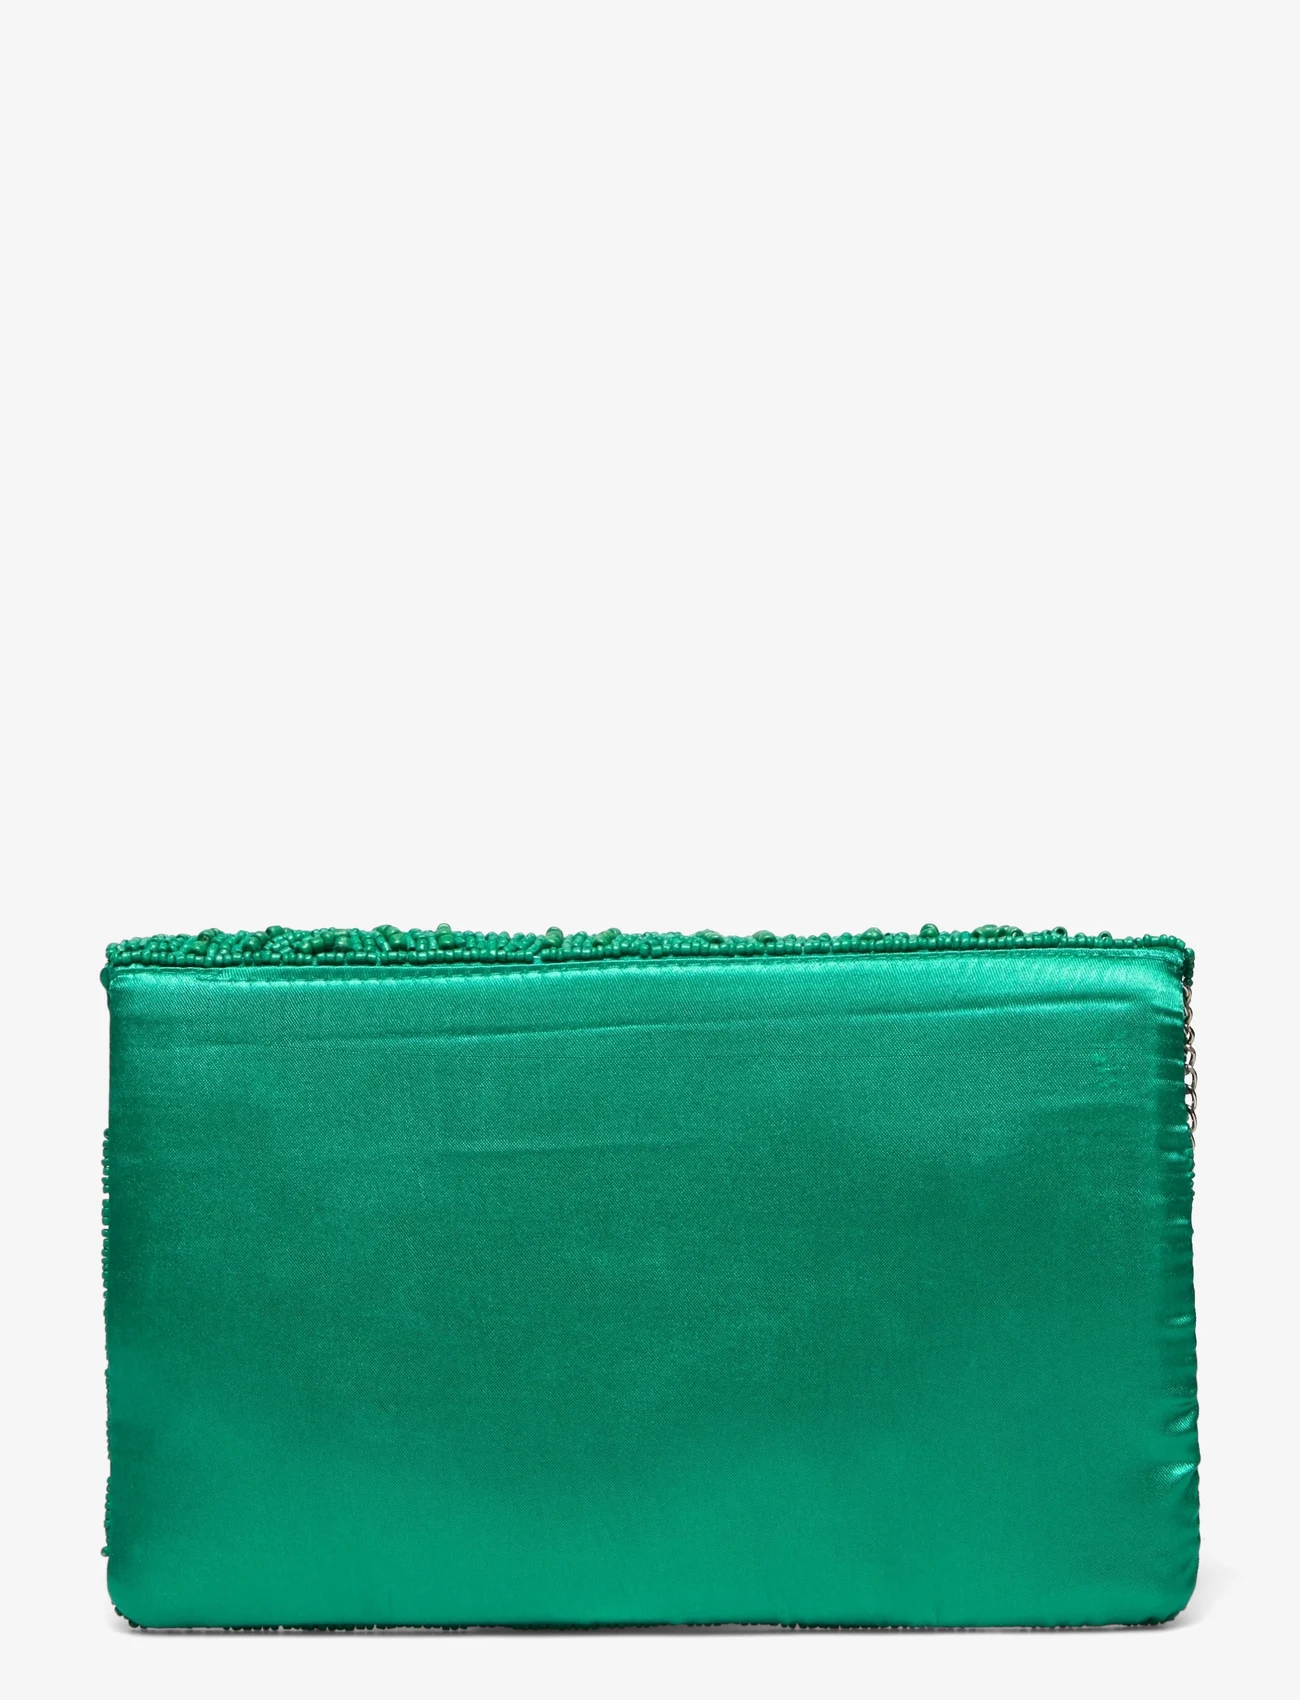 Pipol's Bazaar - Casablanca Green Clutch Bag - festmode zu outlet-preisen - green - 1